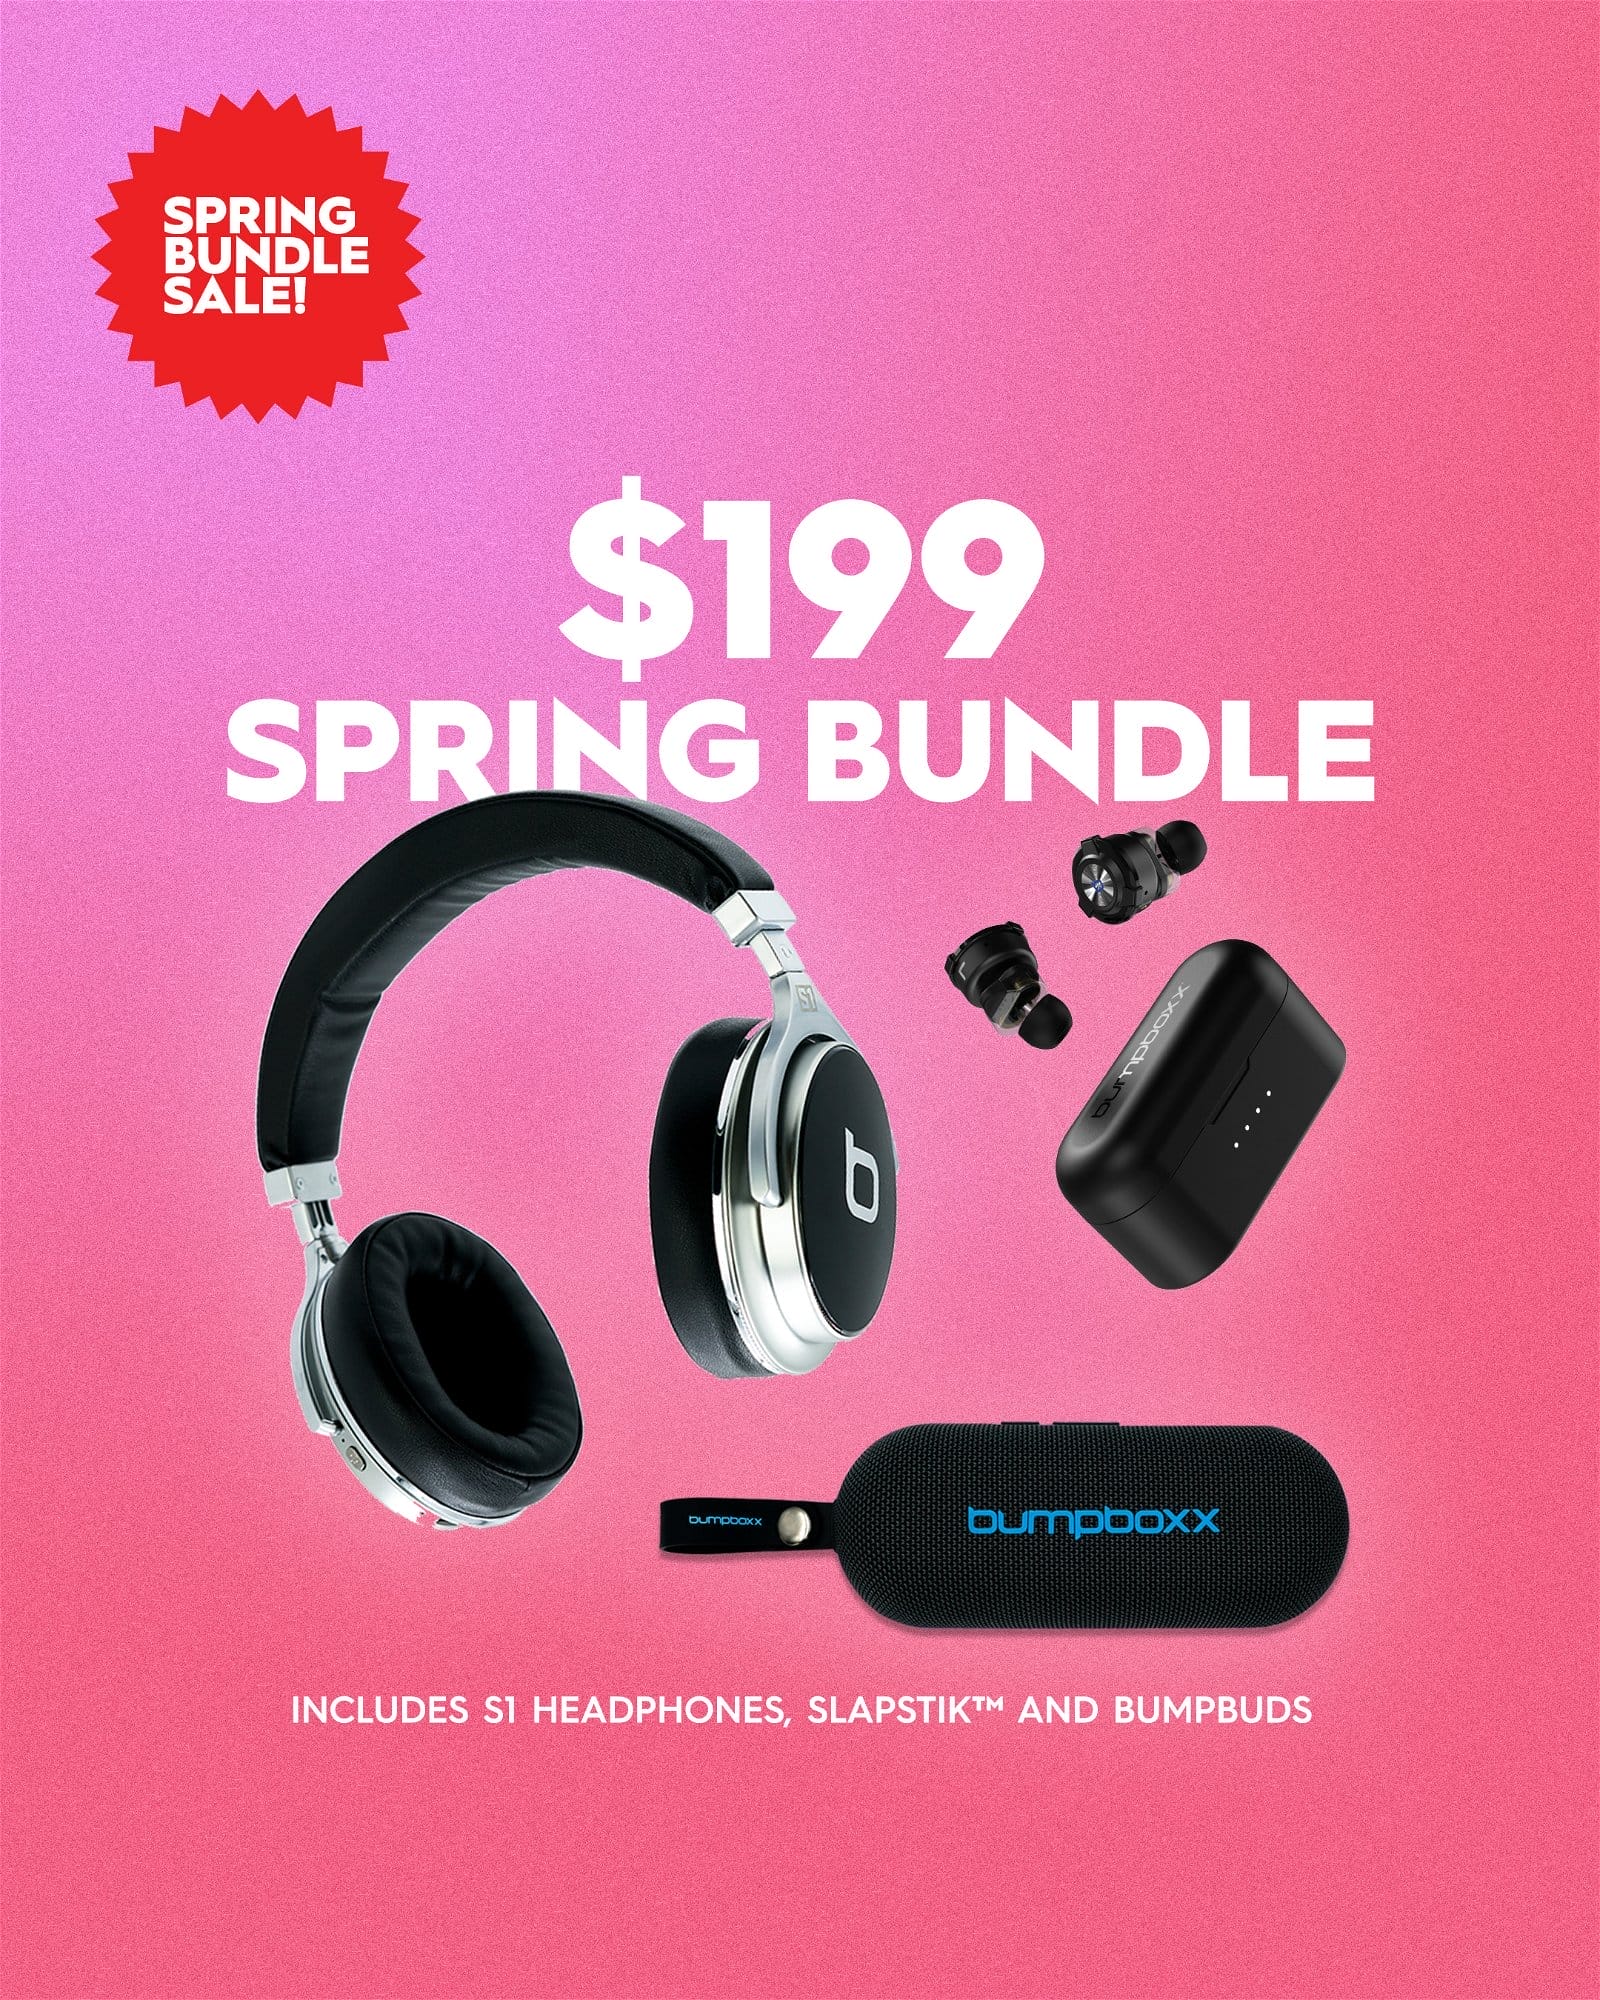 Bumpboxx Spring Bundle Sale